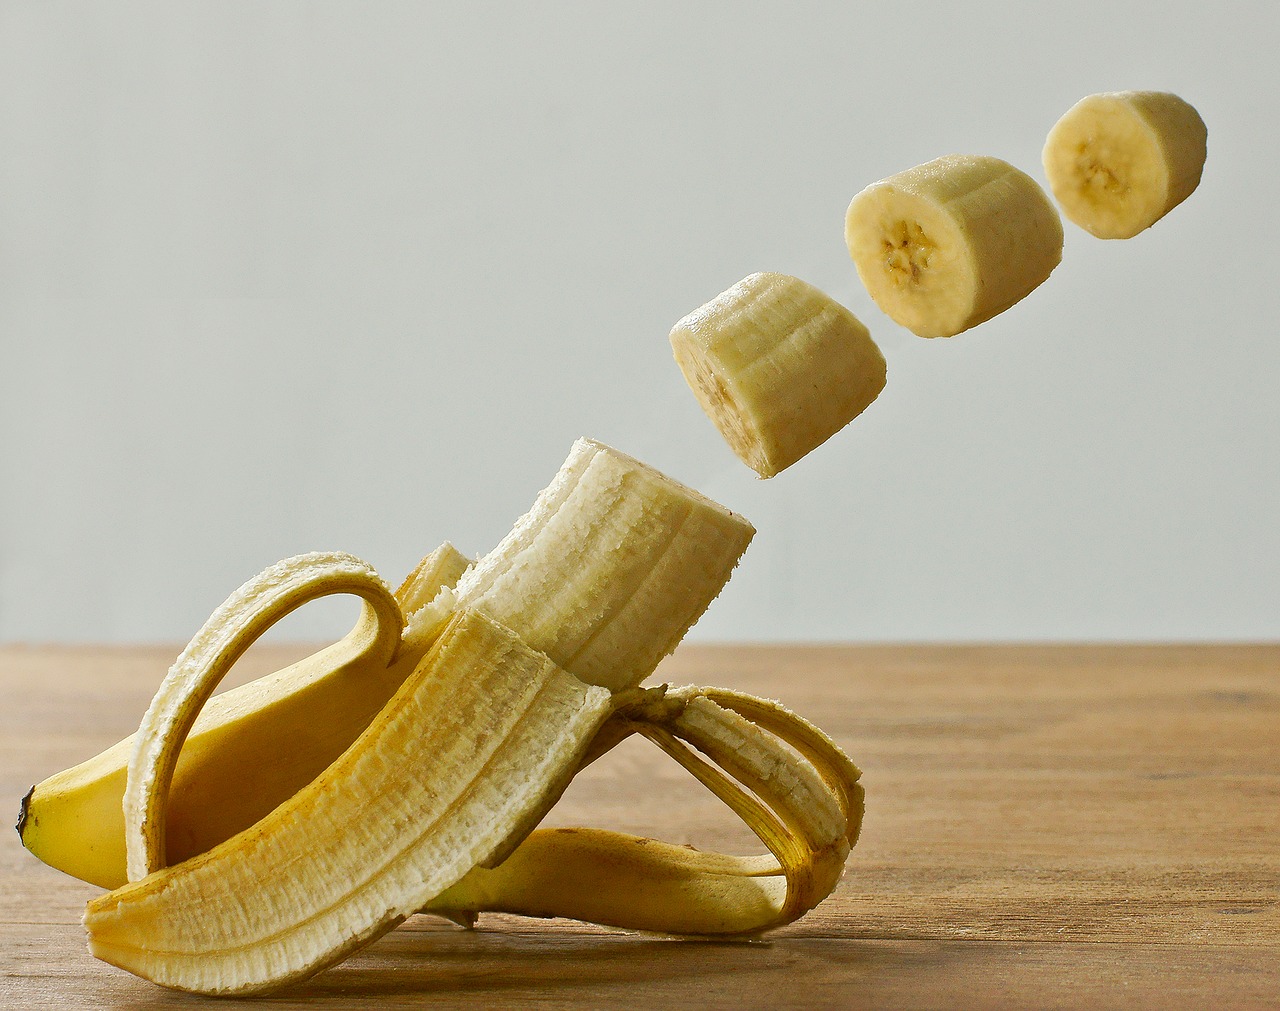 Are bananas safe?